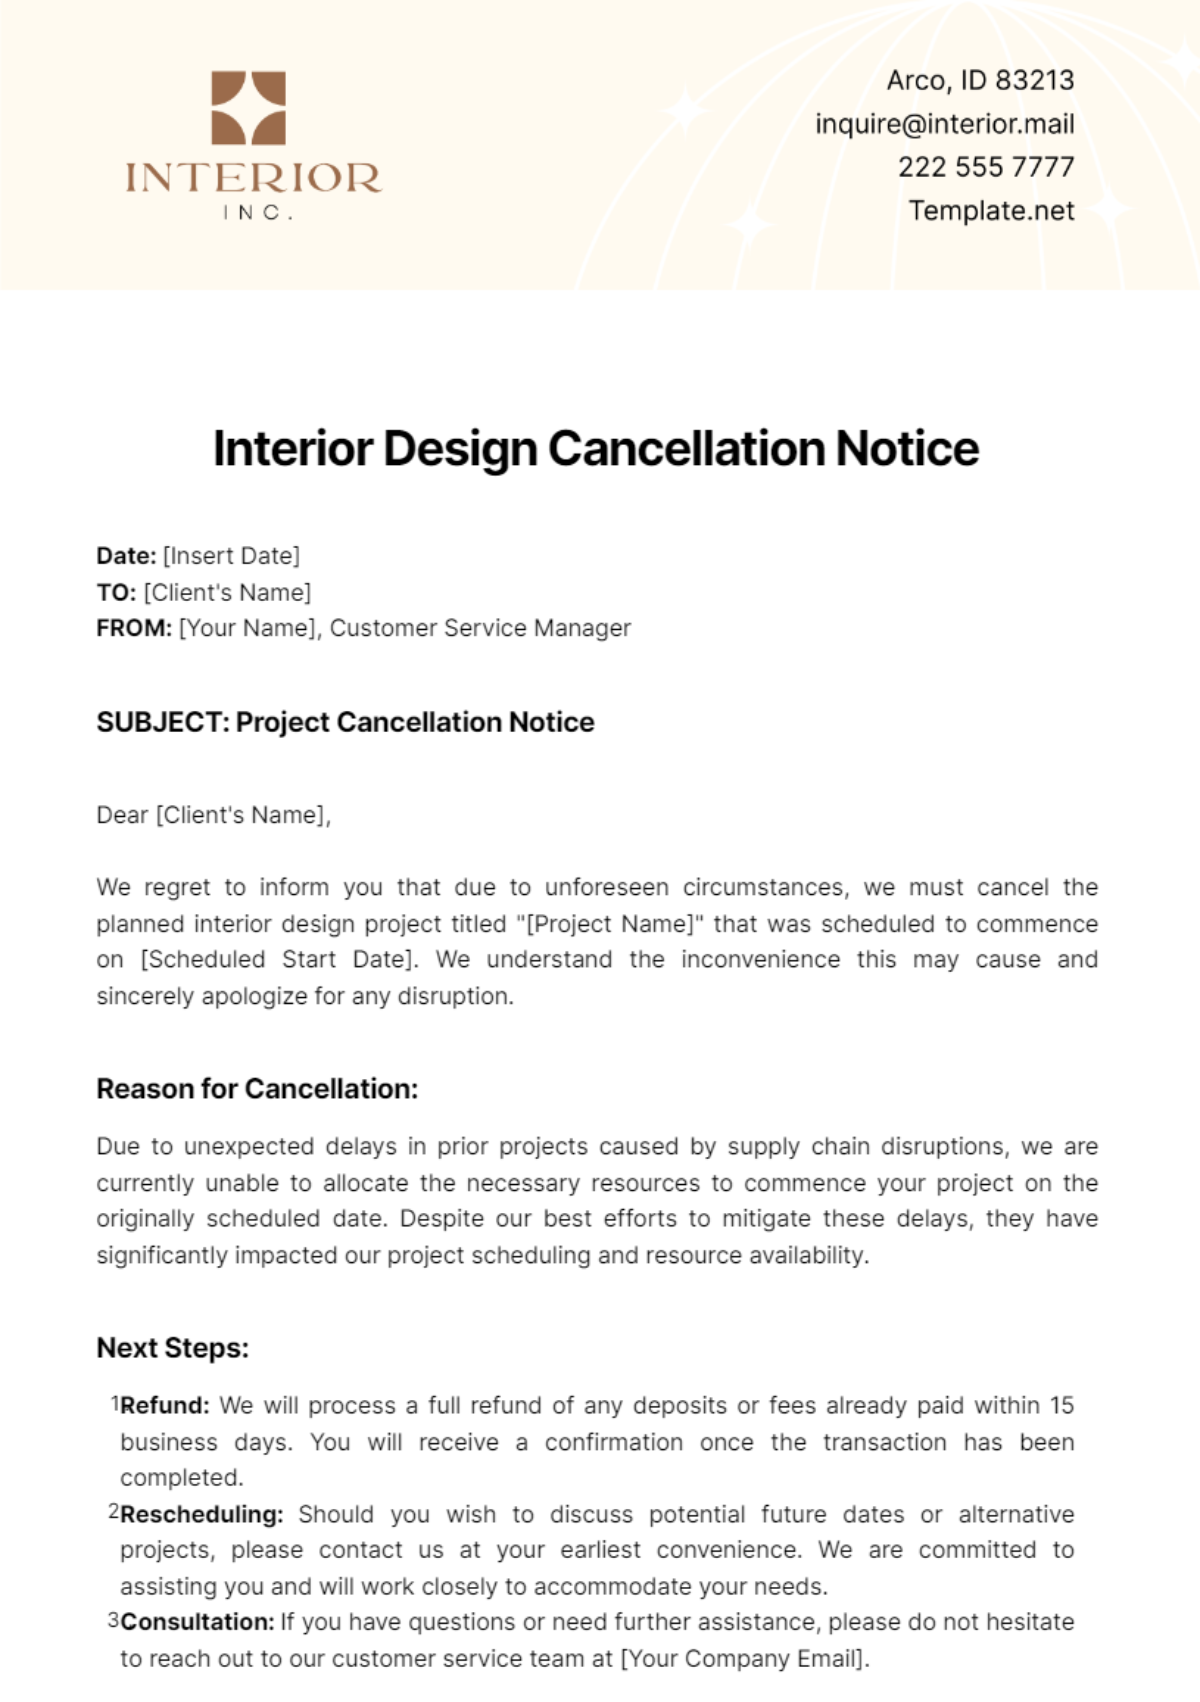 Interior Design Cancellation Notice Template